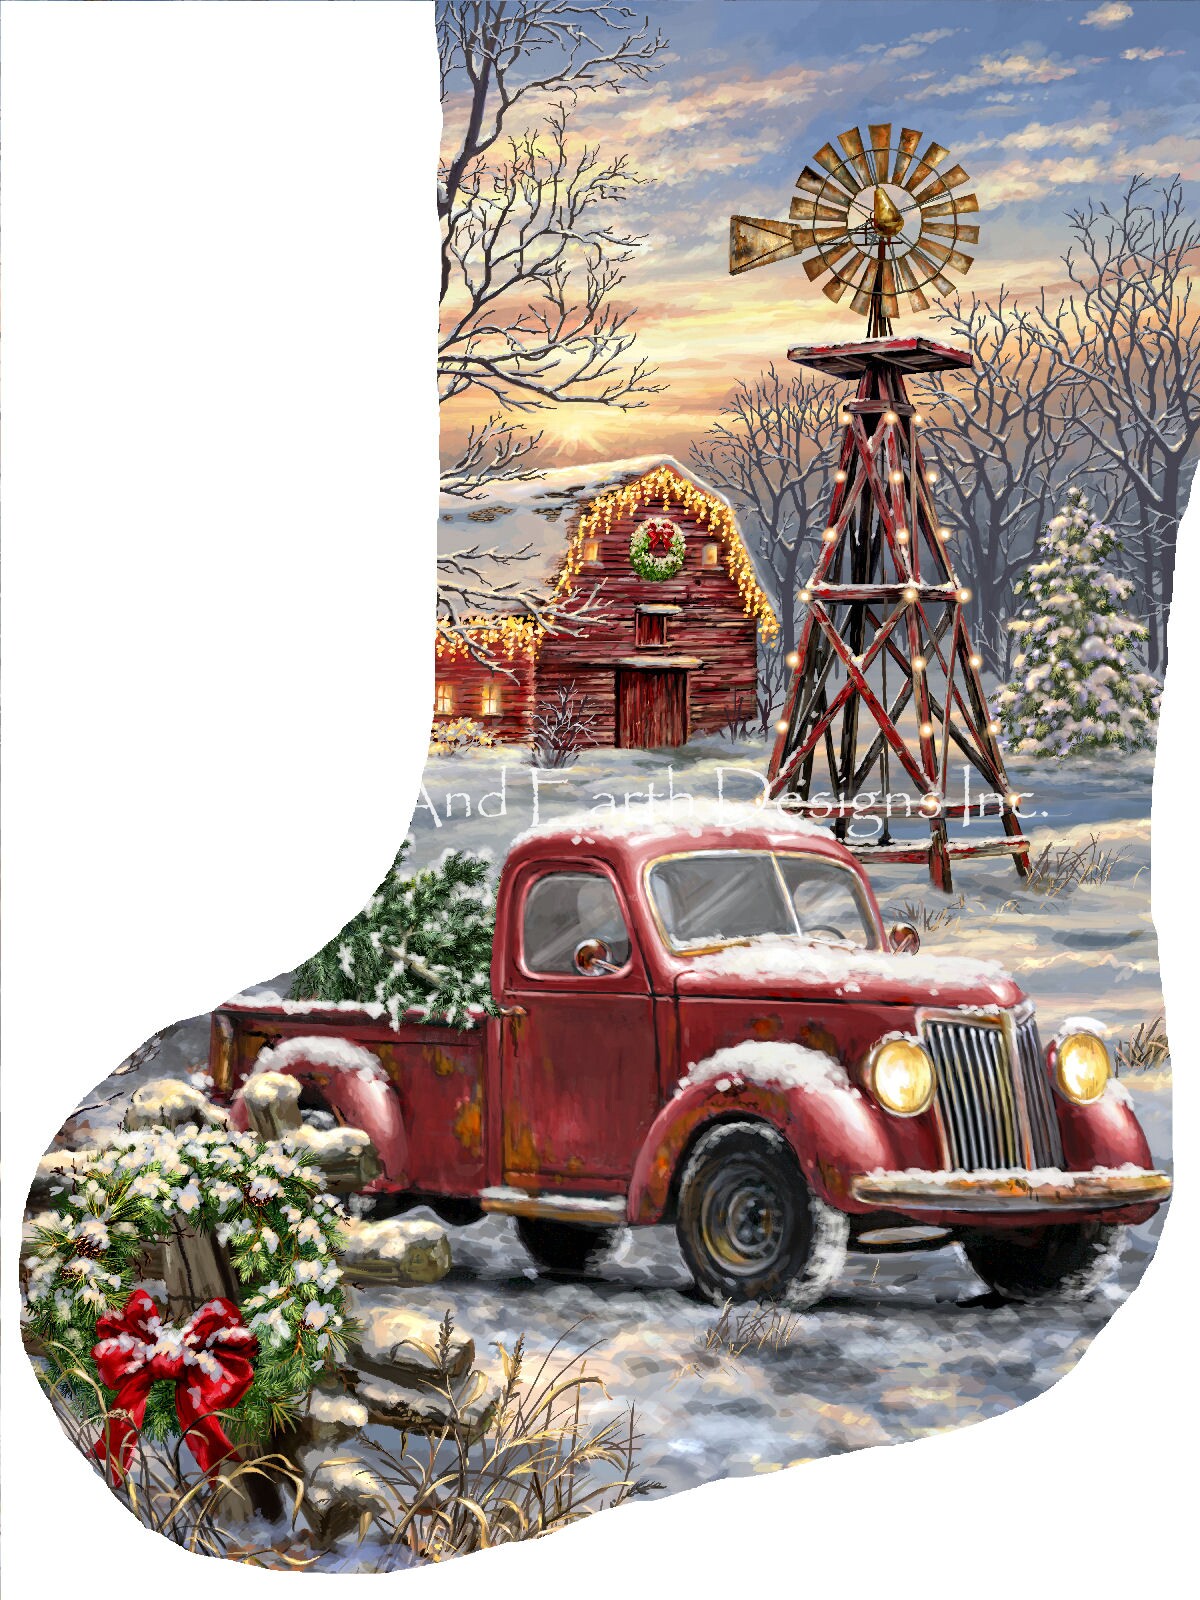 Stocking Christmas Tree Farm 2 Cross Stitch By Dona Gelsinger